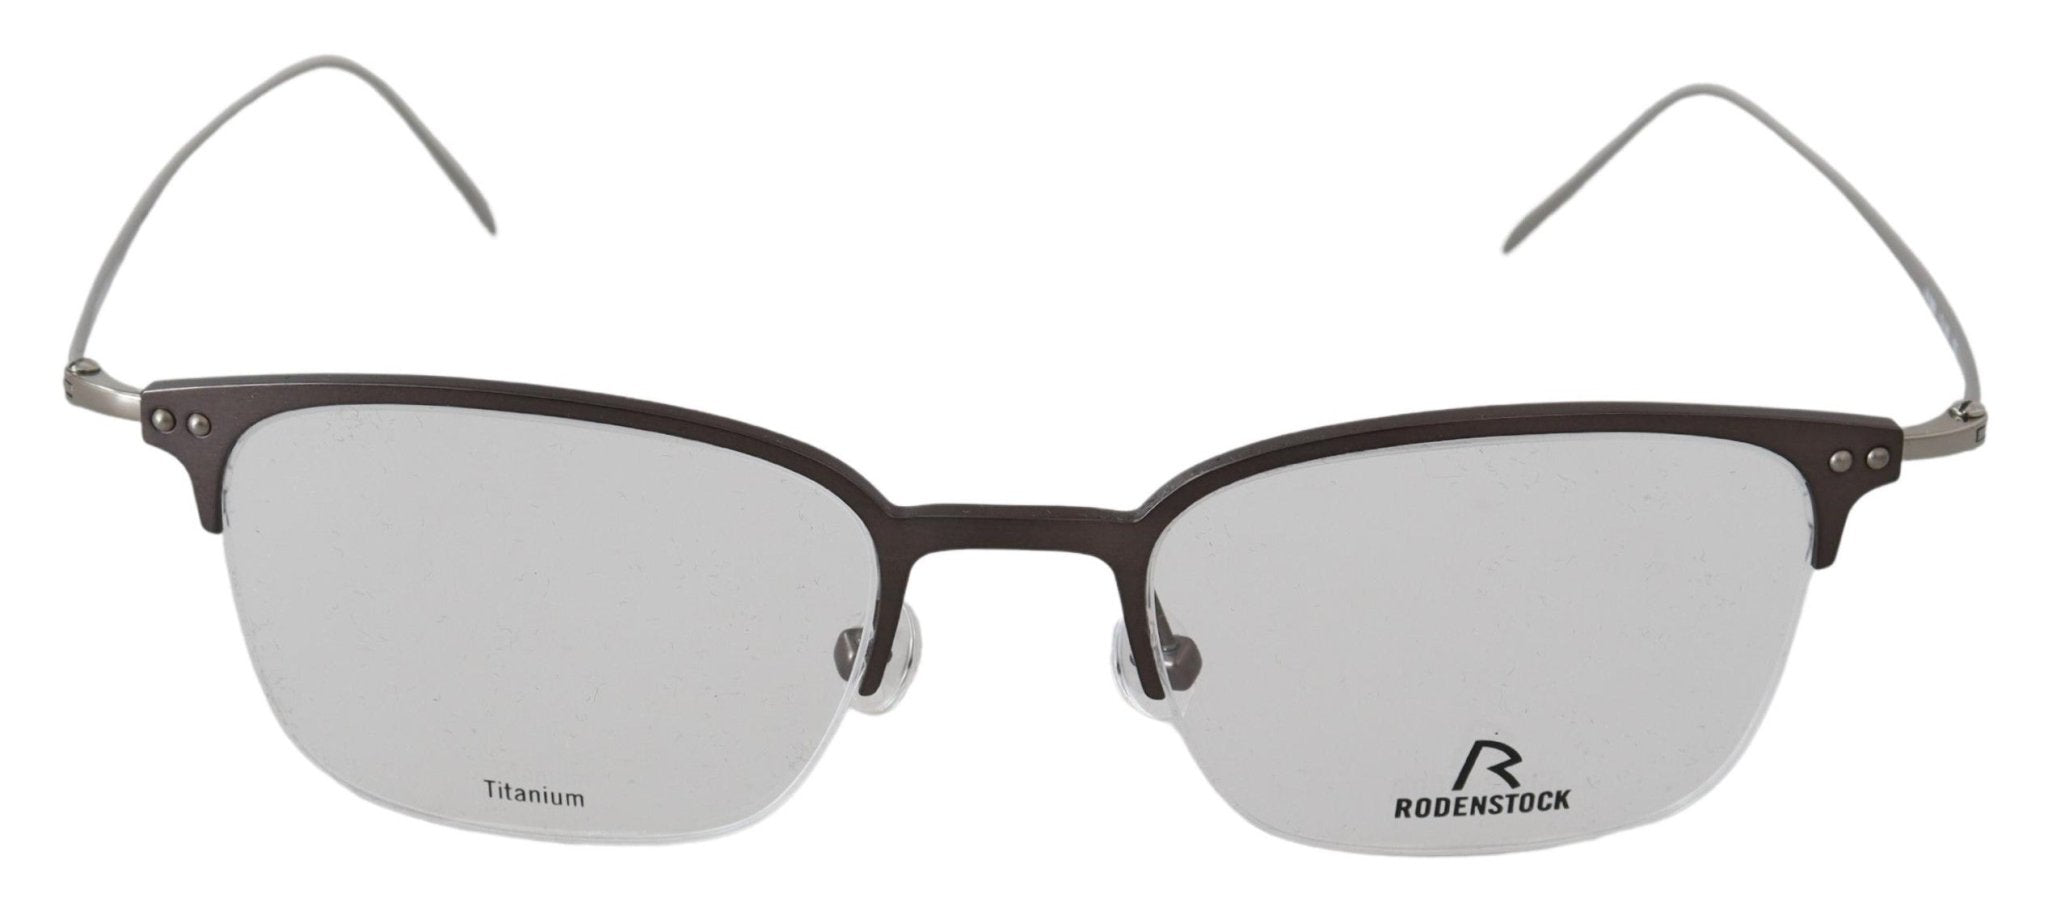 Rodenstock Reading Glasses Lens Scratch Resistant Eyewear - Fizigo